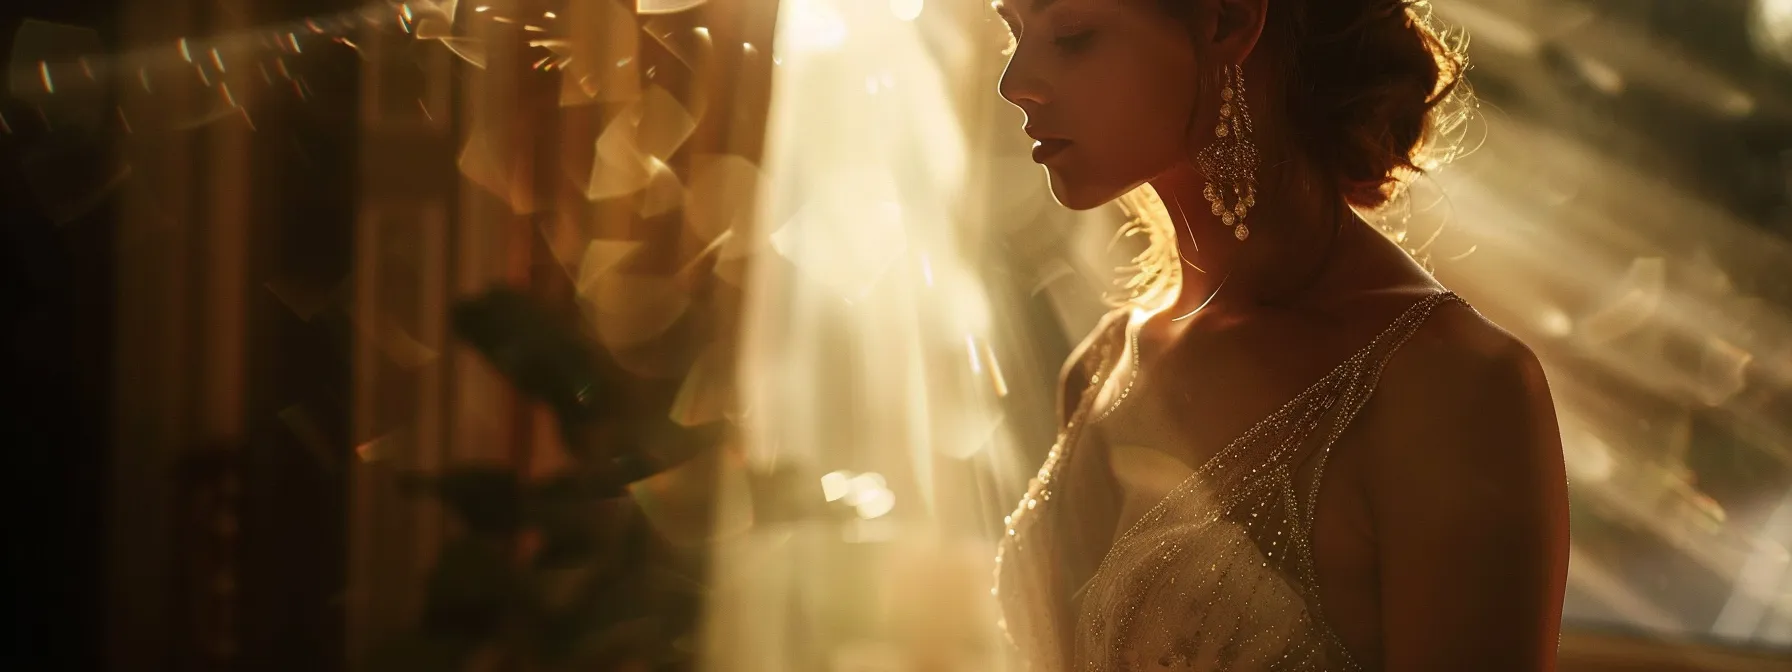 soft, ethereal lighting illuminates a beautiful bride in a stunning wedding dress.